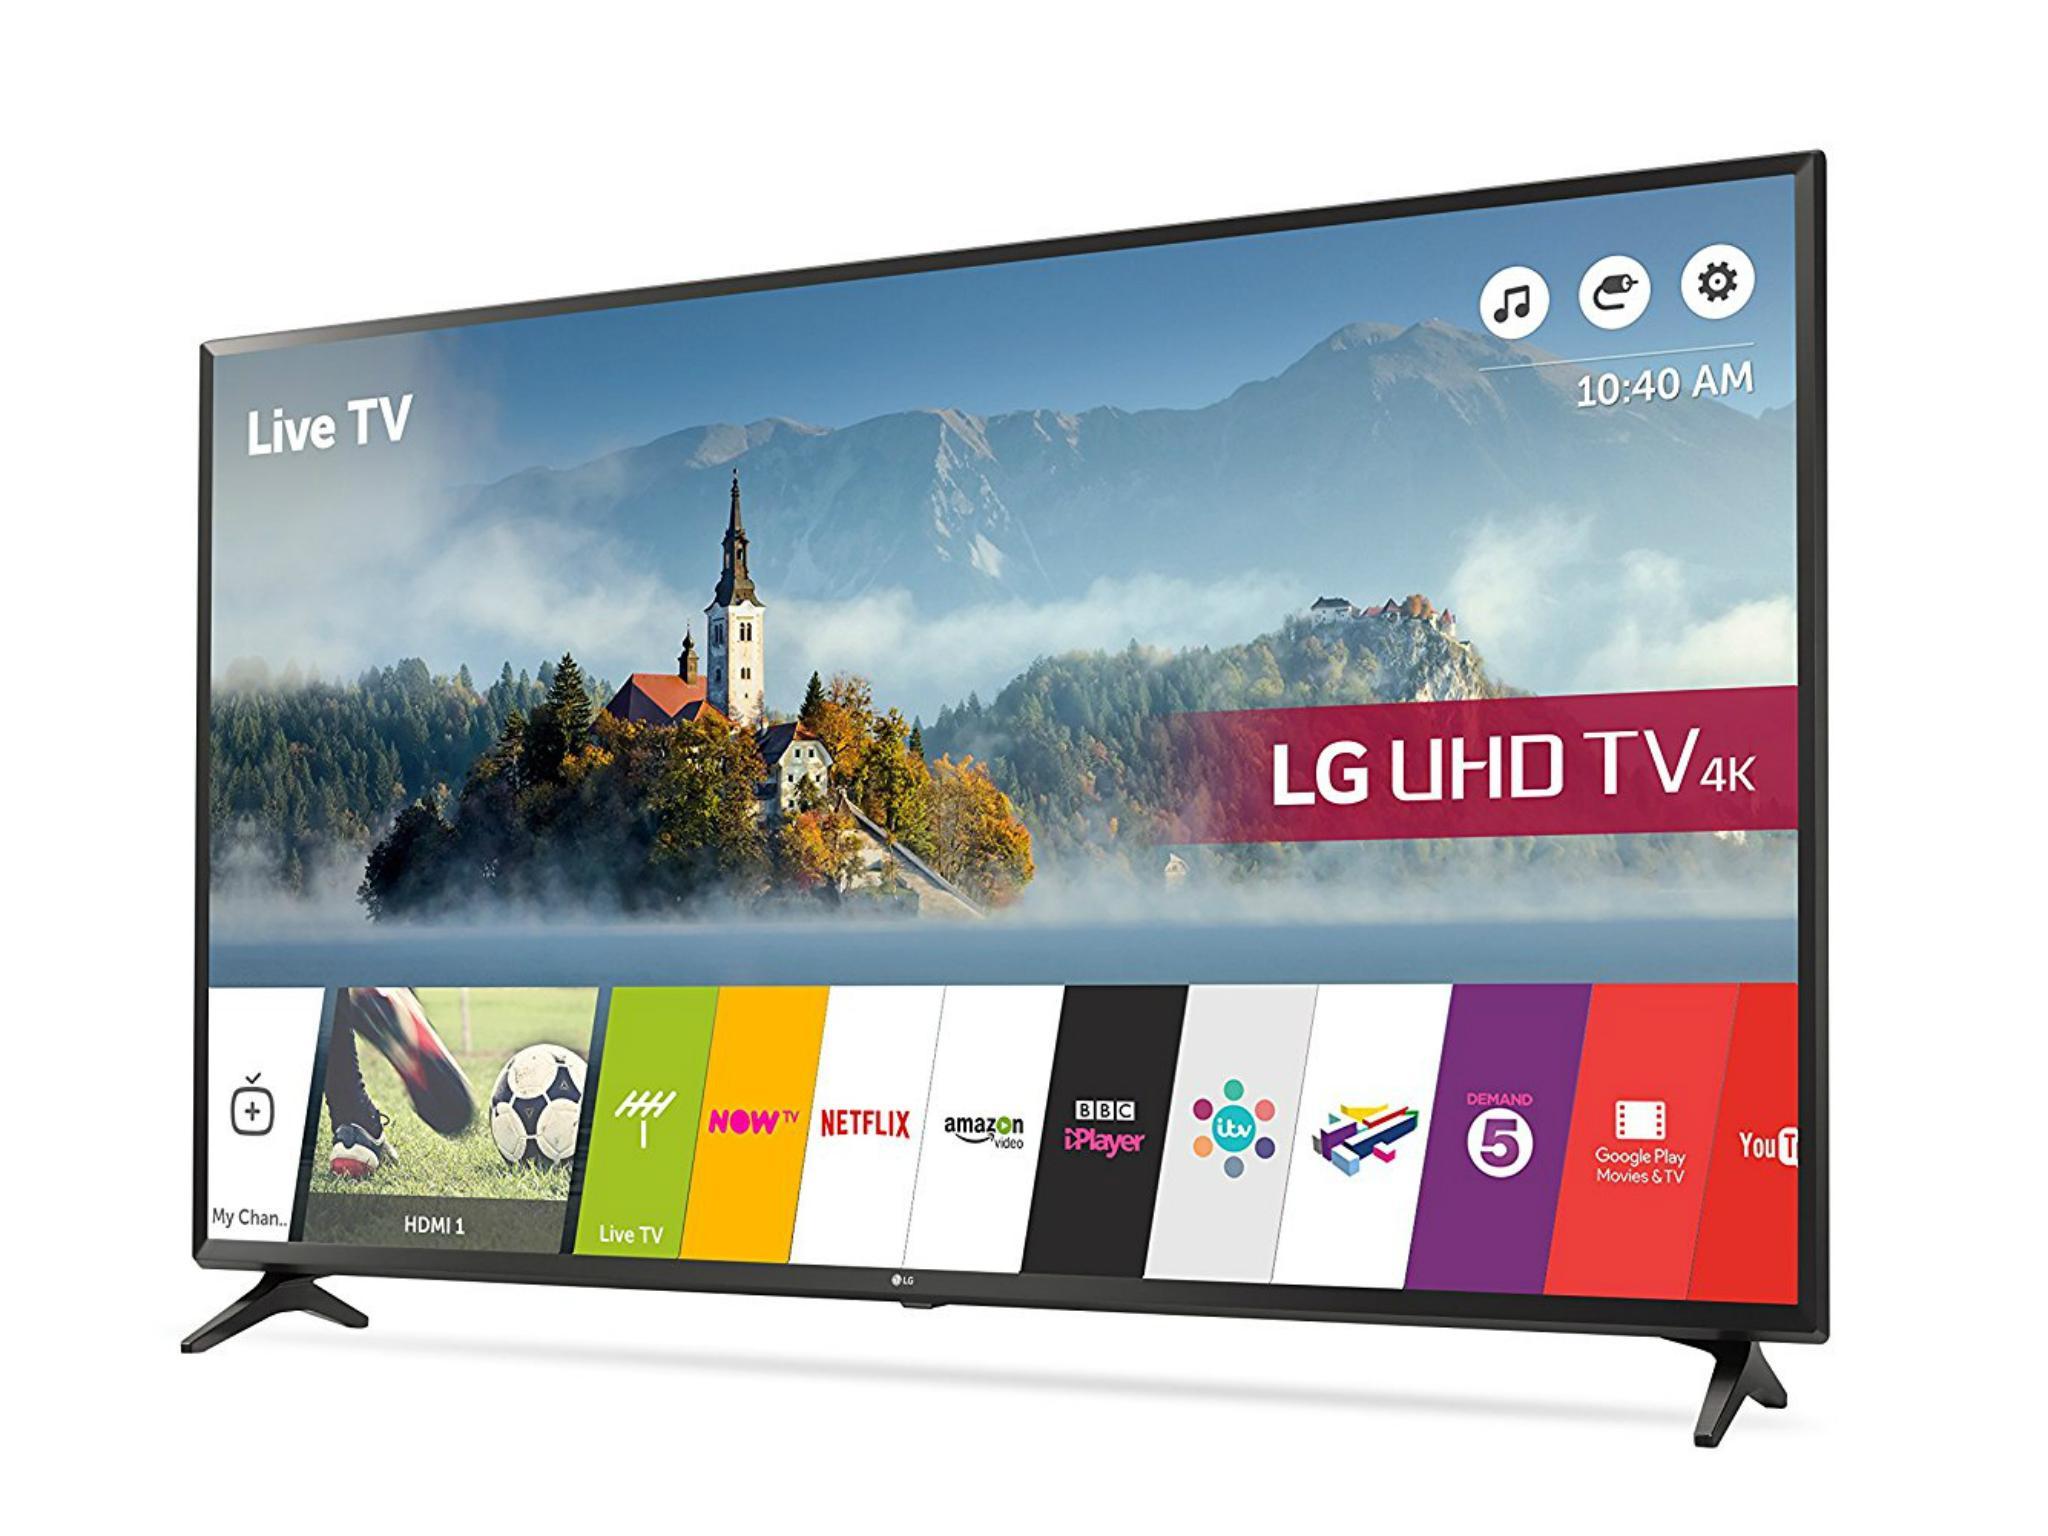 The 55UJ630V 55-inch 4K Ultra HD HDR Smart LED TV is one of LG’s latest models